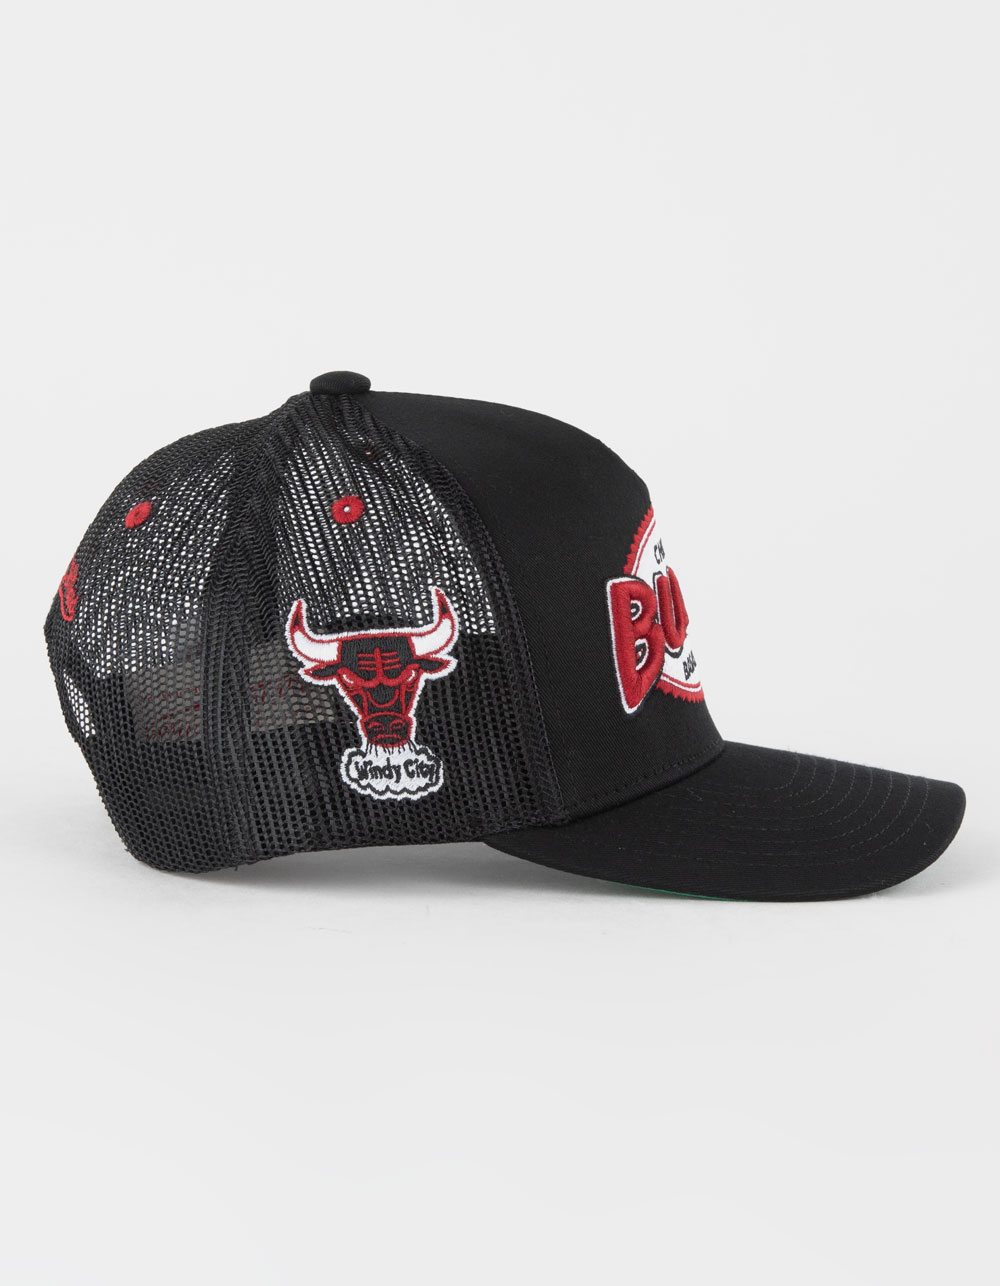 Mitchell & Ness Chicago Bulls NBA Team Trucker Hat - Black - One Size